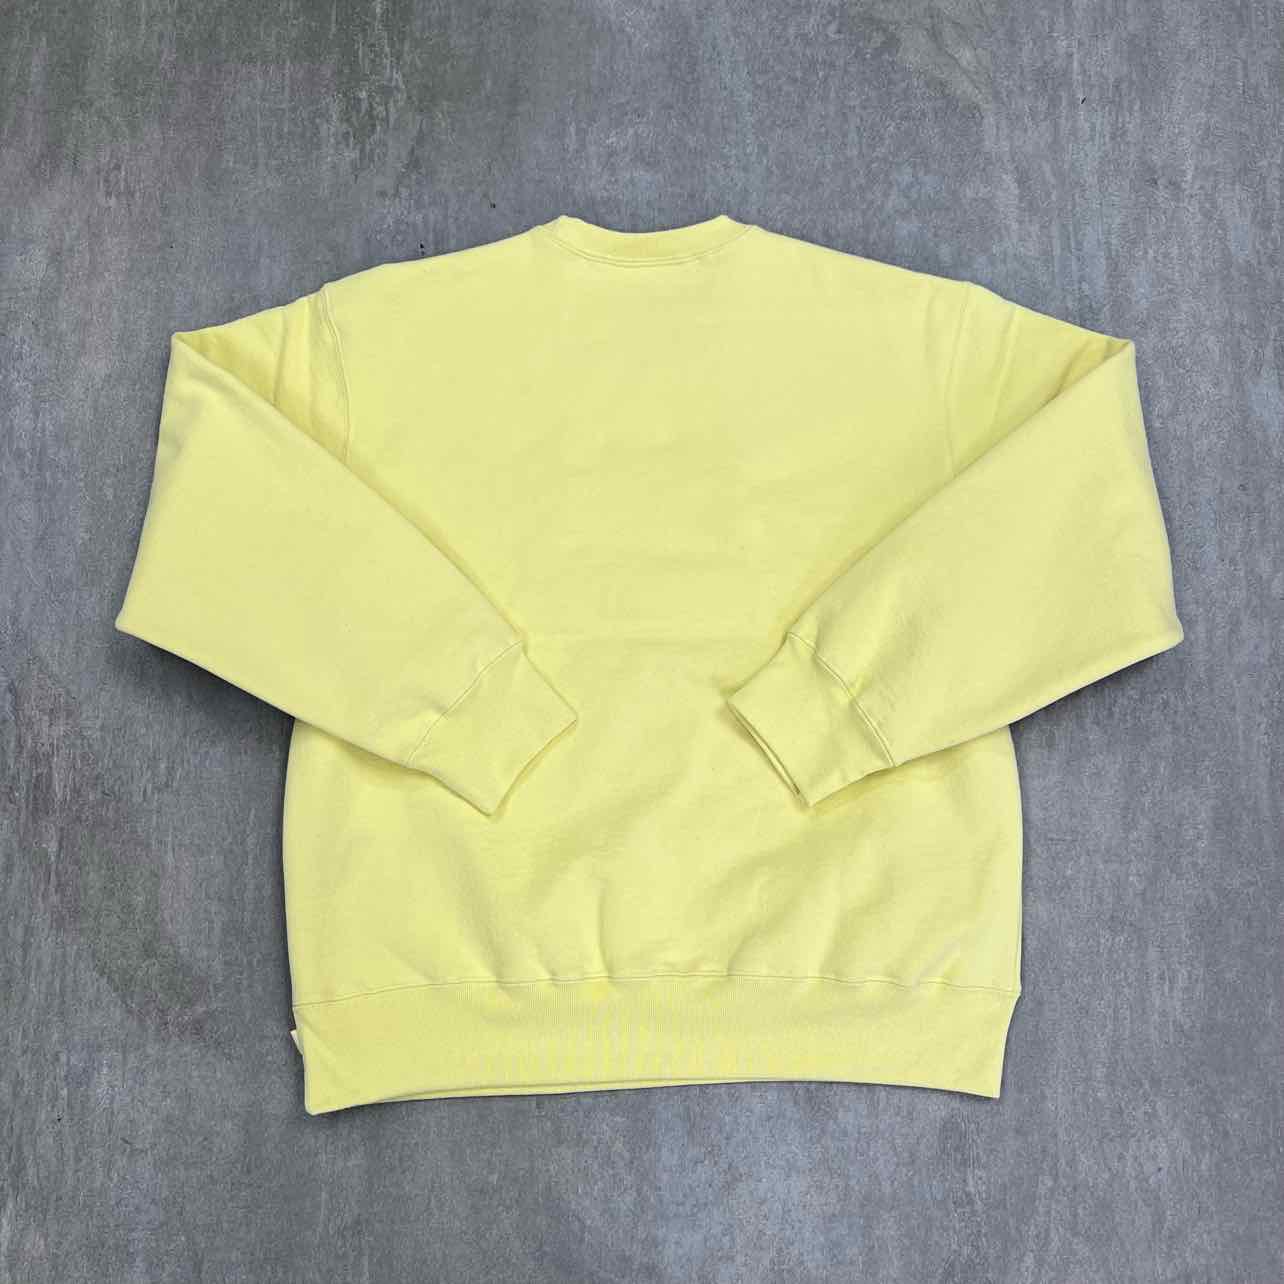 Supreme Crewneck Sweater &quot;BOX LOGO&quot; Pale Yellow New Size M